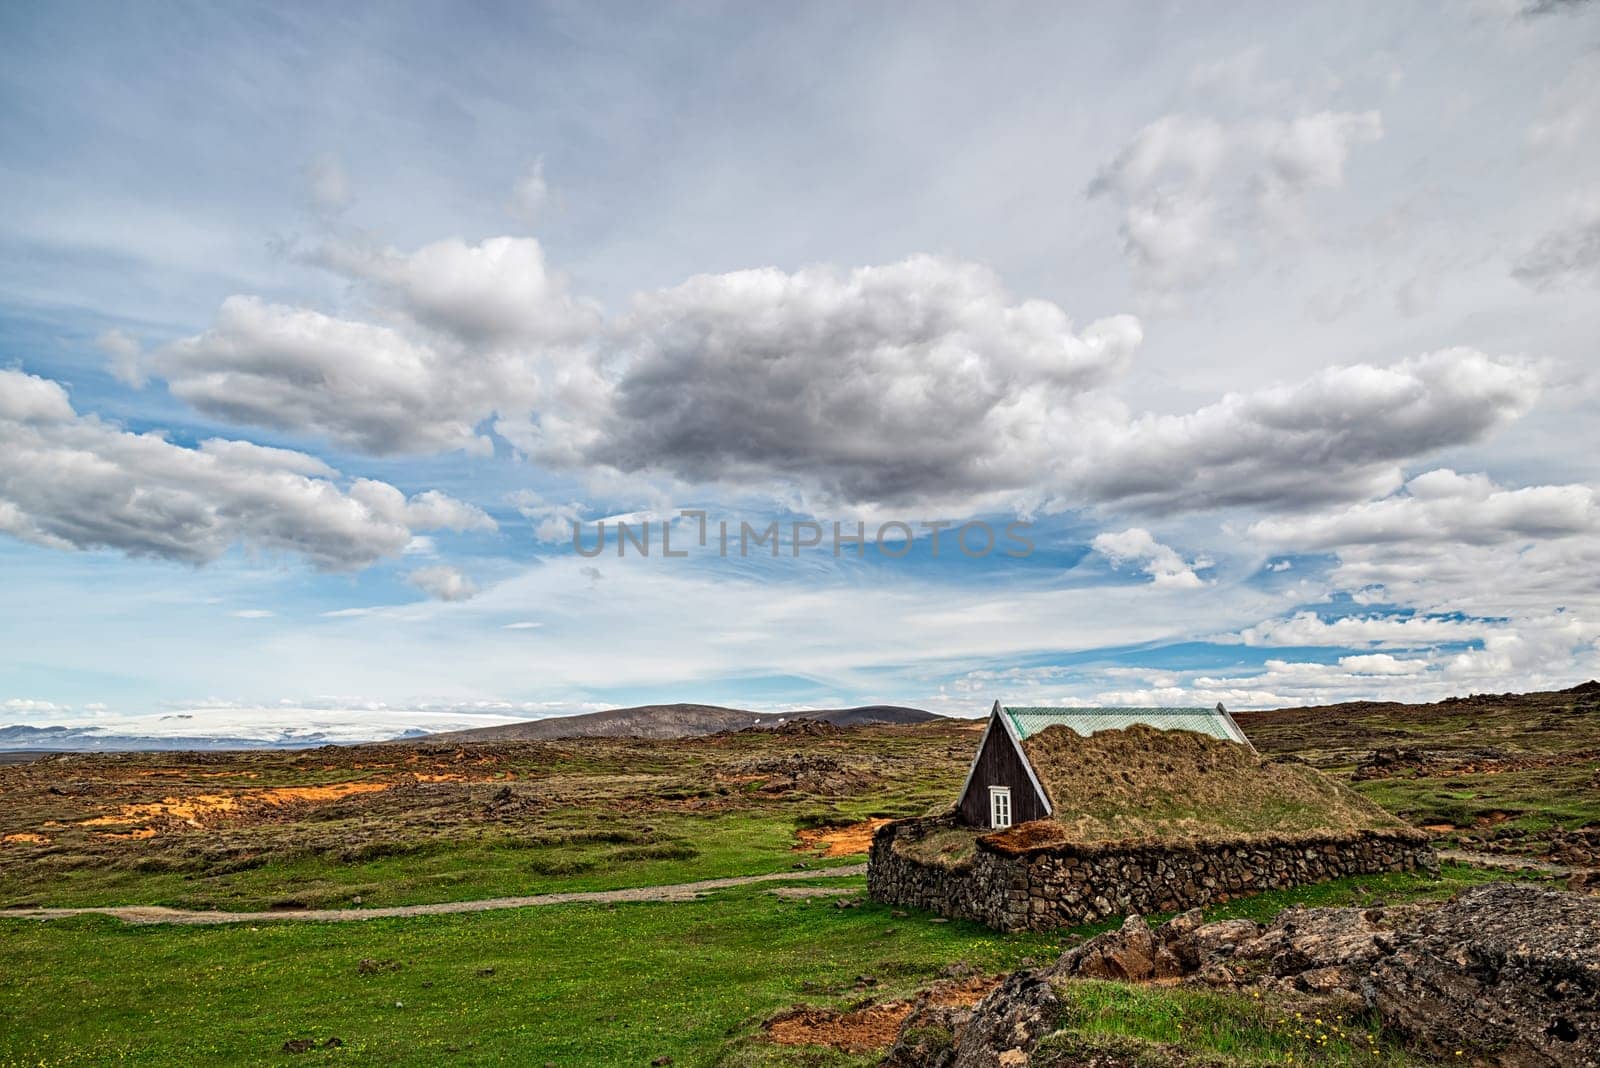 Icelandic traditional turf house at Hveravellir by LuigiMorbidelli